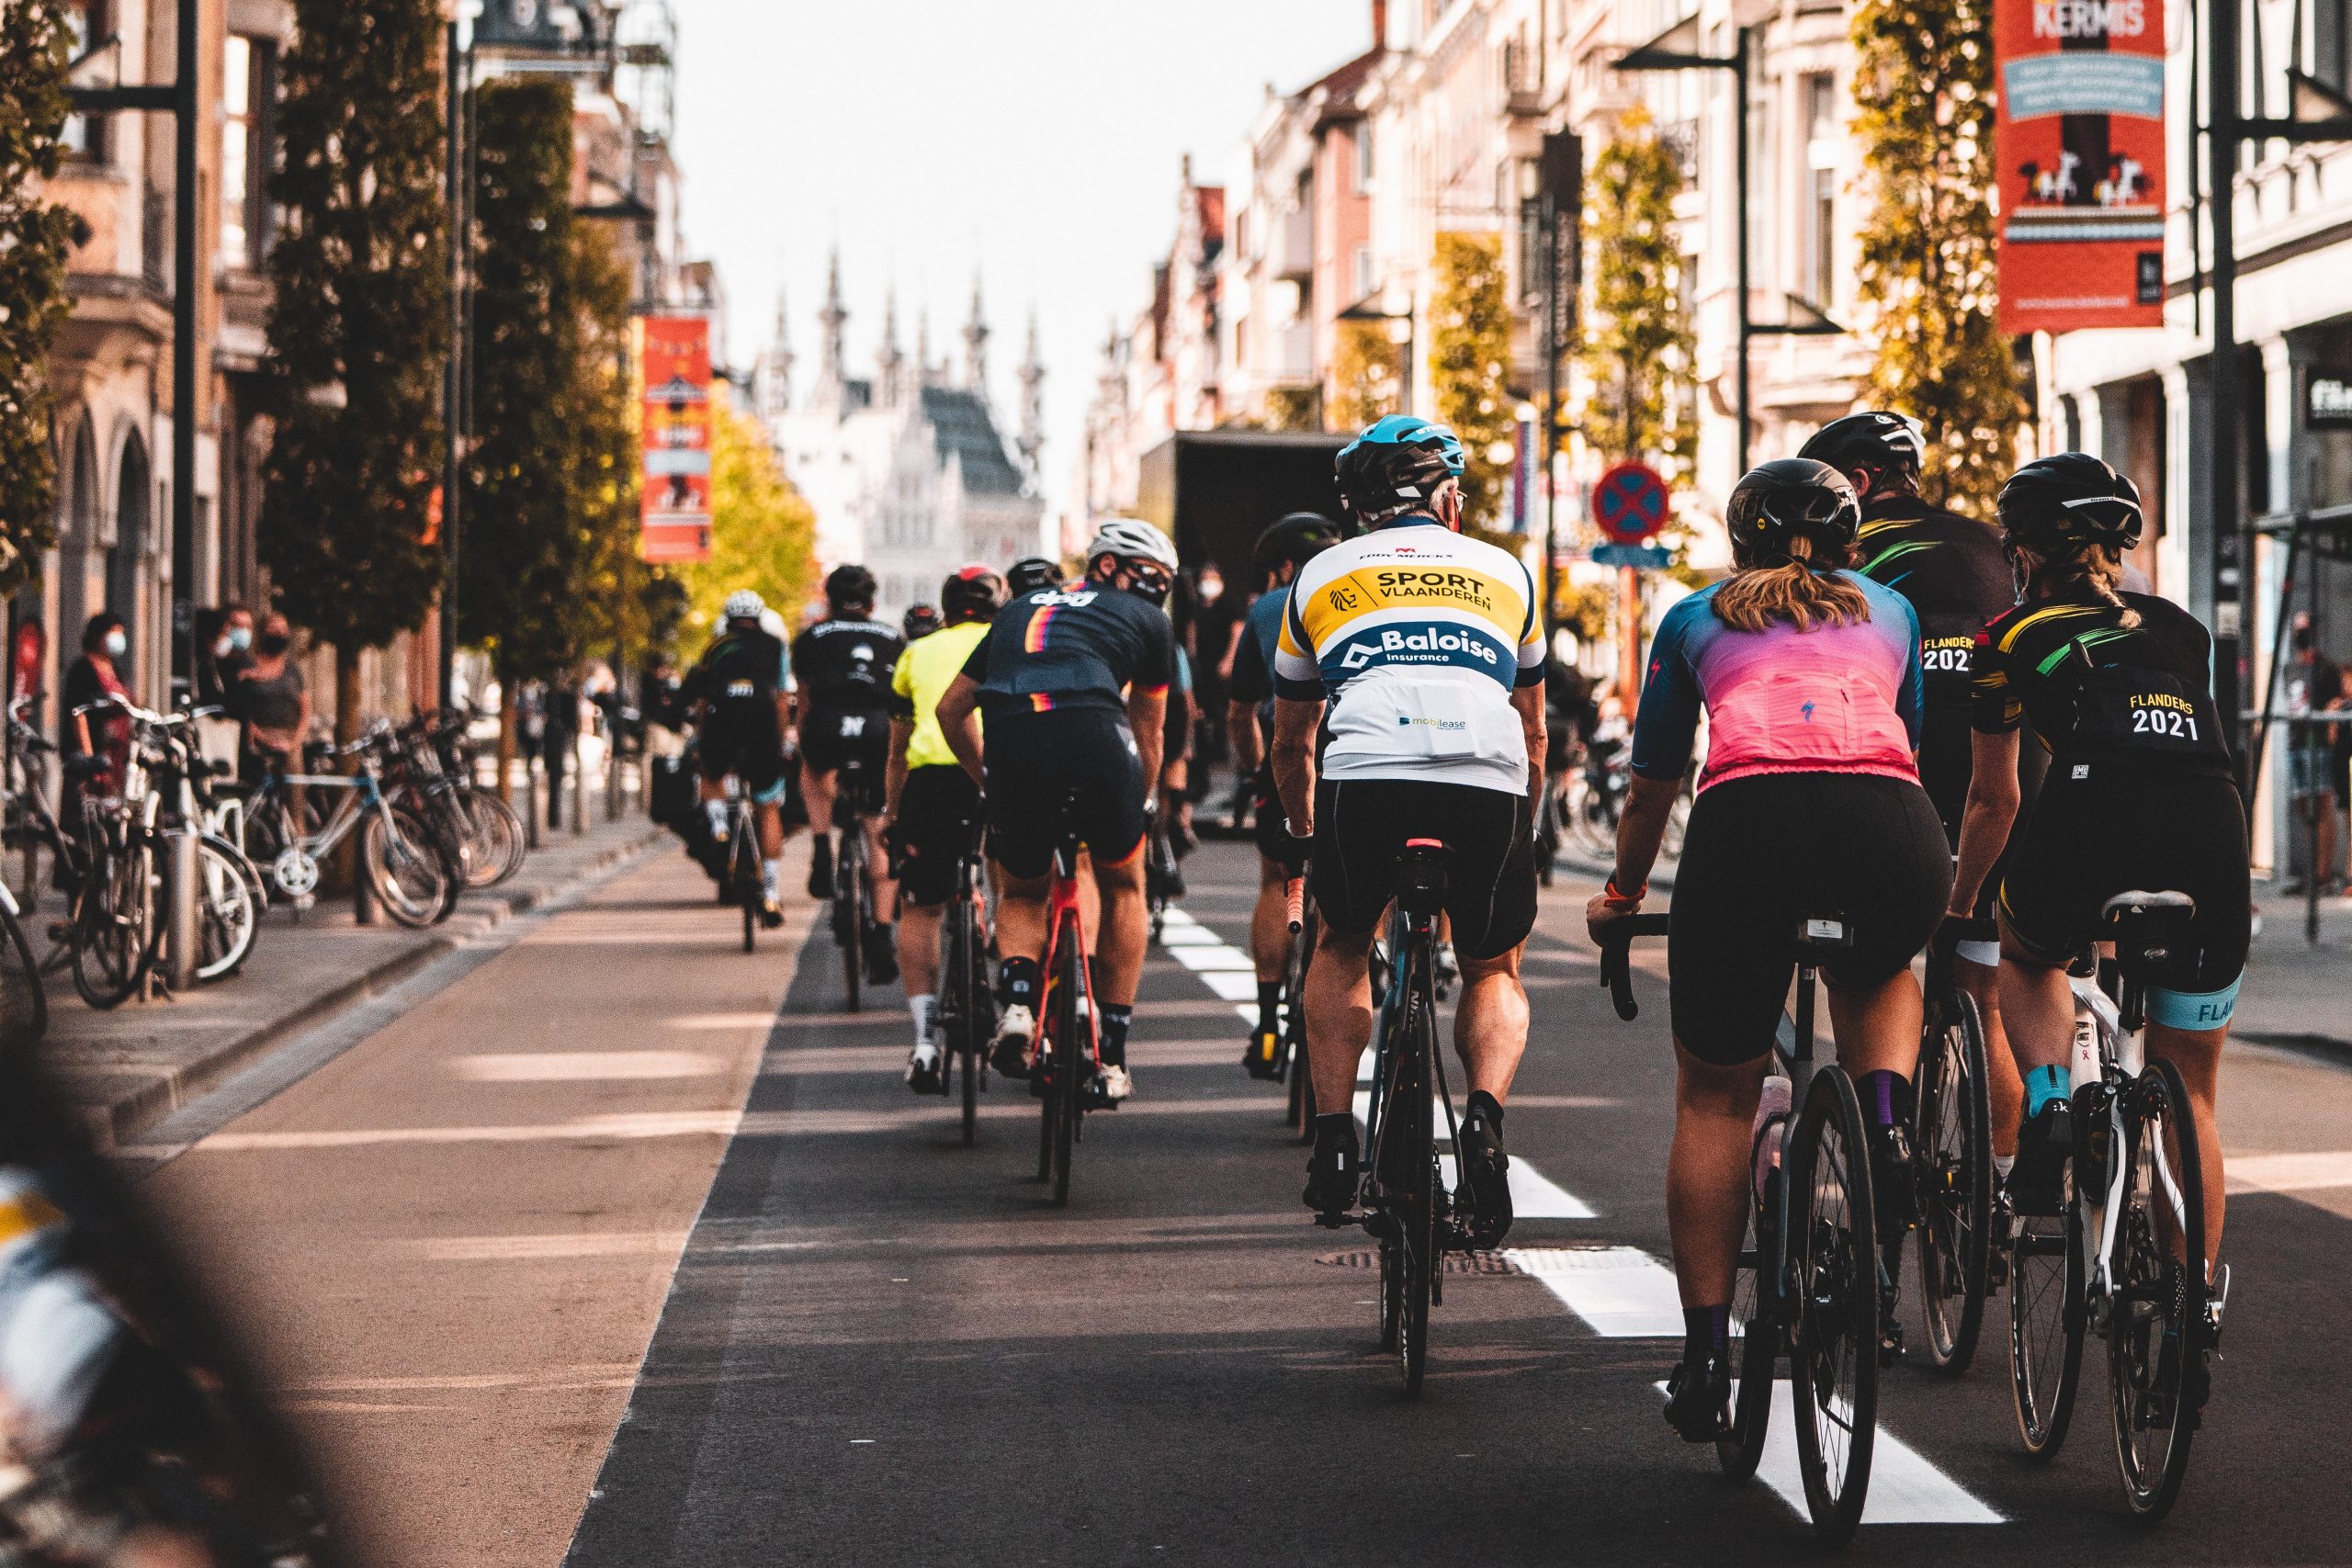 Flanders 2021 Ride Leuven vindt plaats op donderdag 23 september